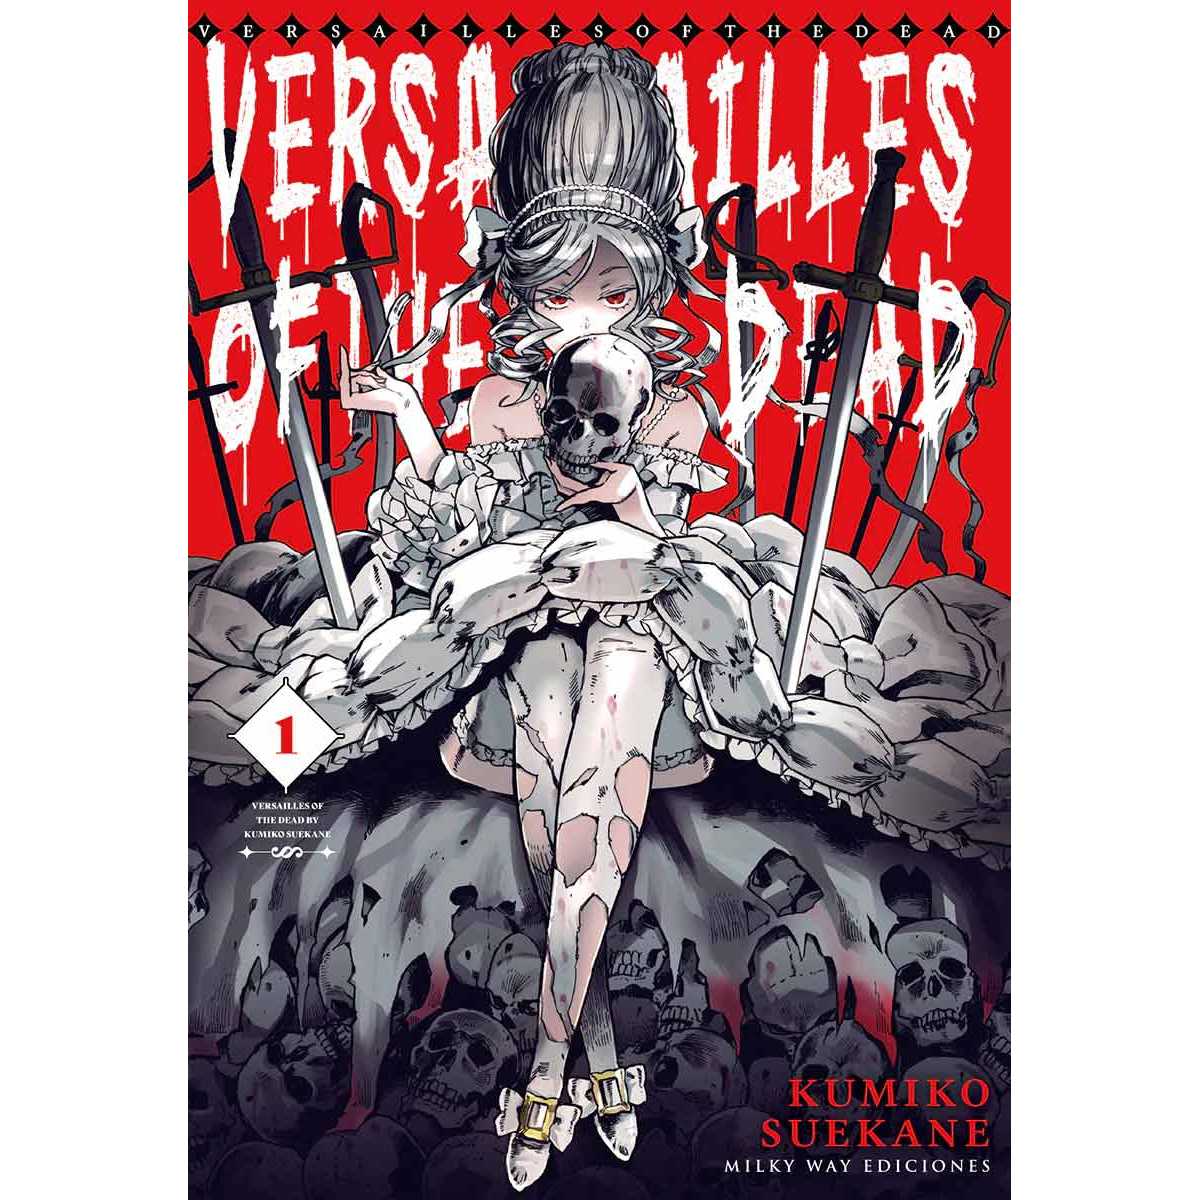 Versailles of the Dead 01